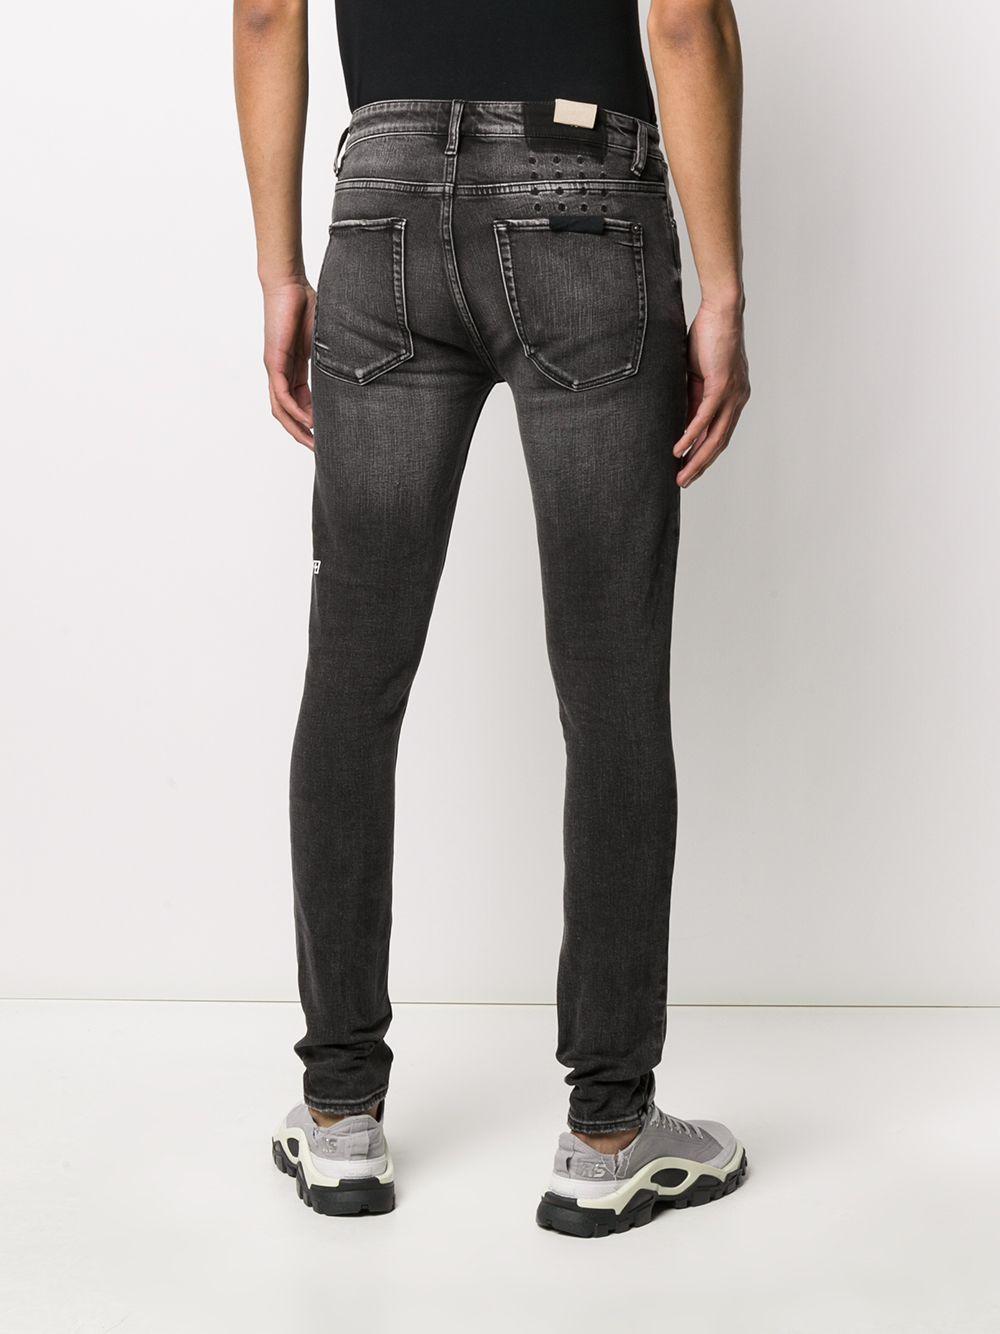 Ksubi Denim High-rise Skinny Jeans in Black for Men - Lyst